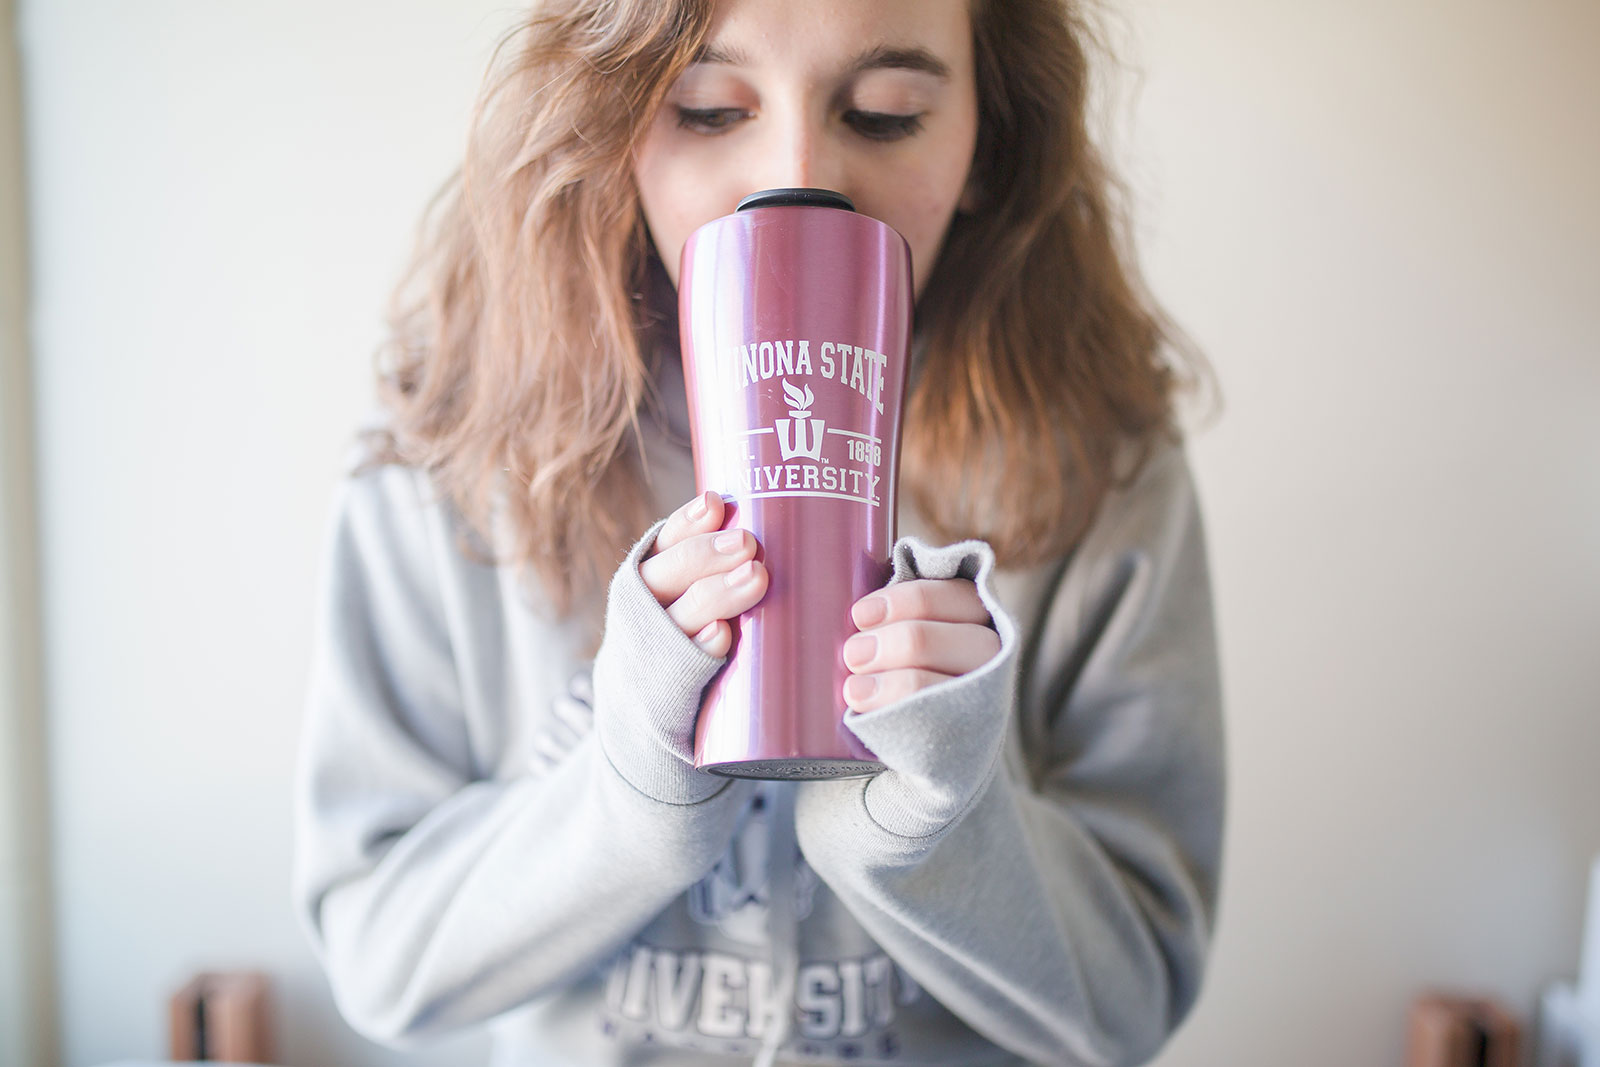 Student drinking coffee